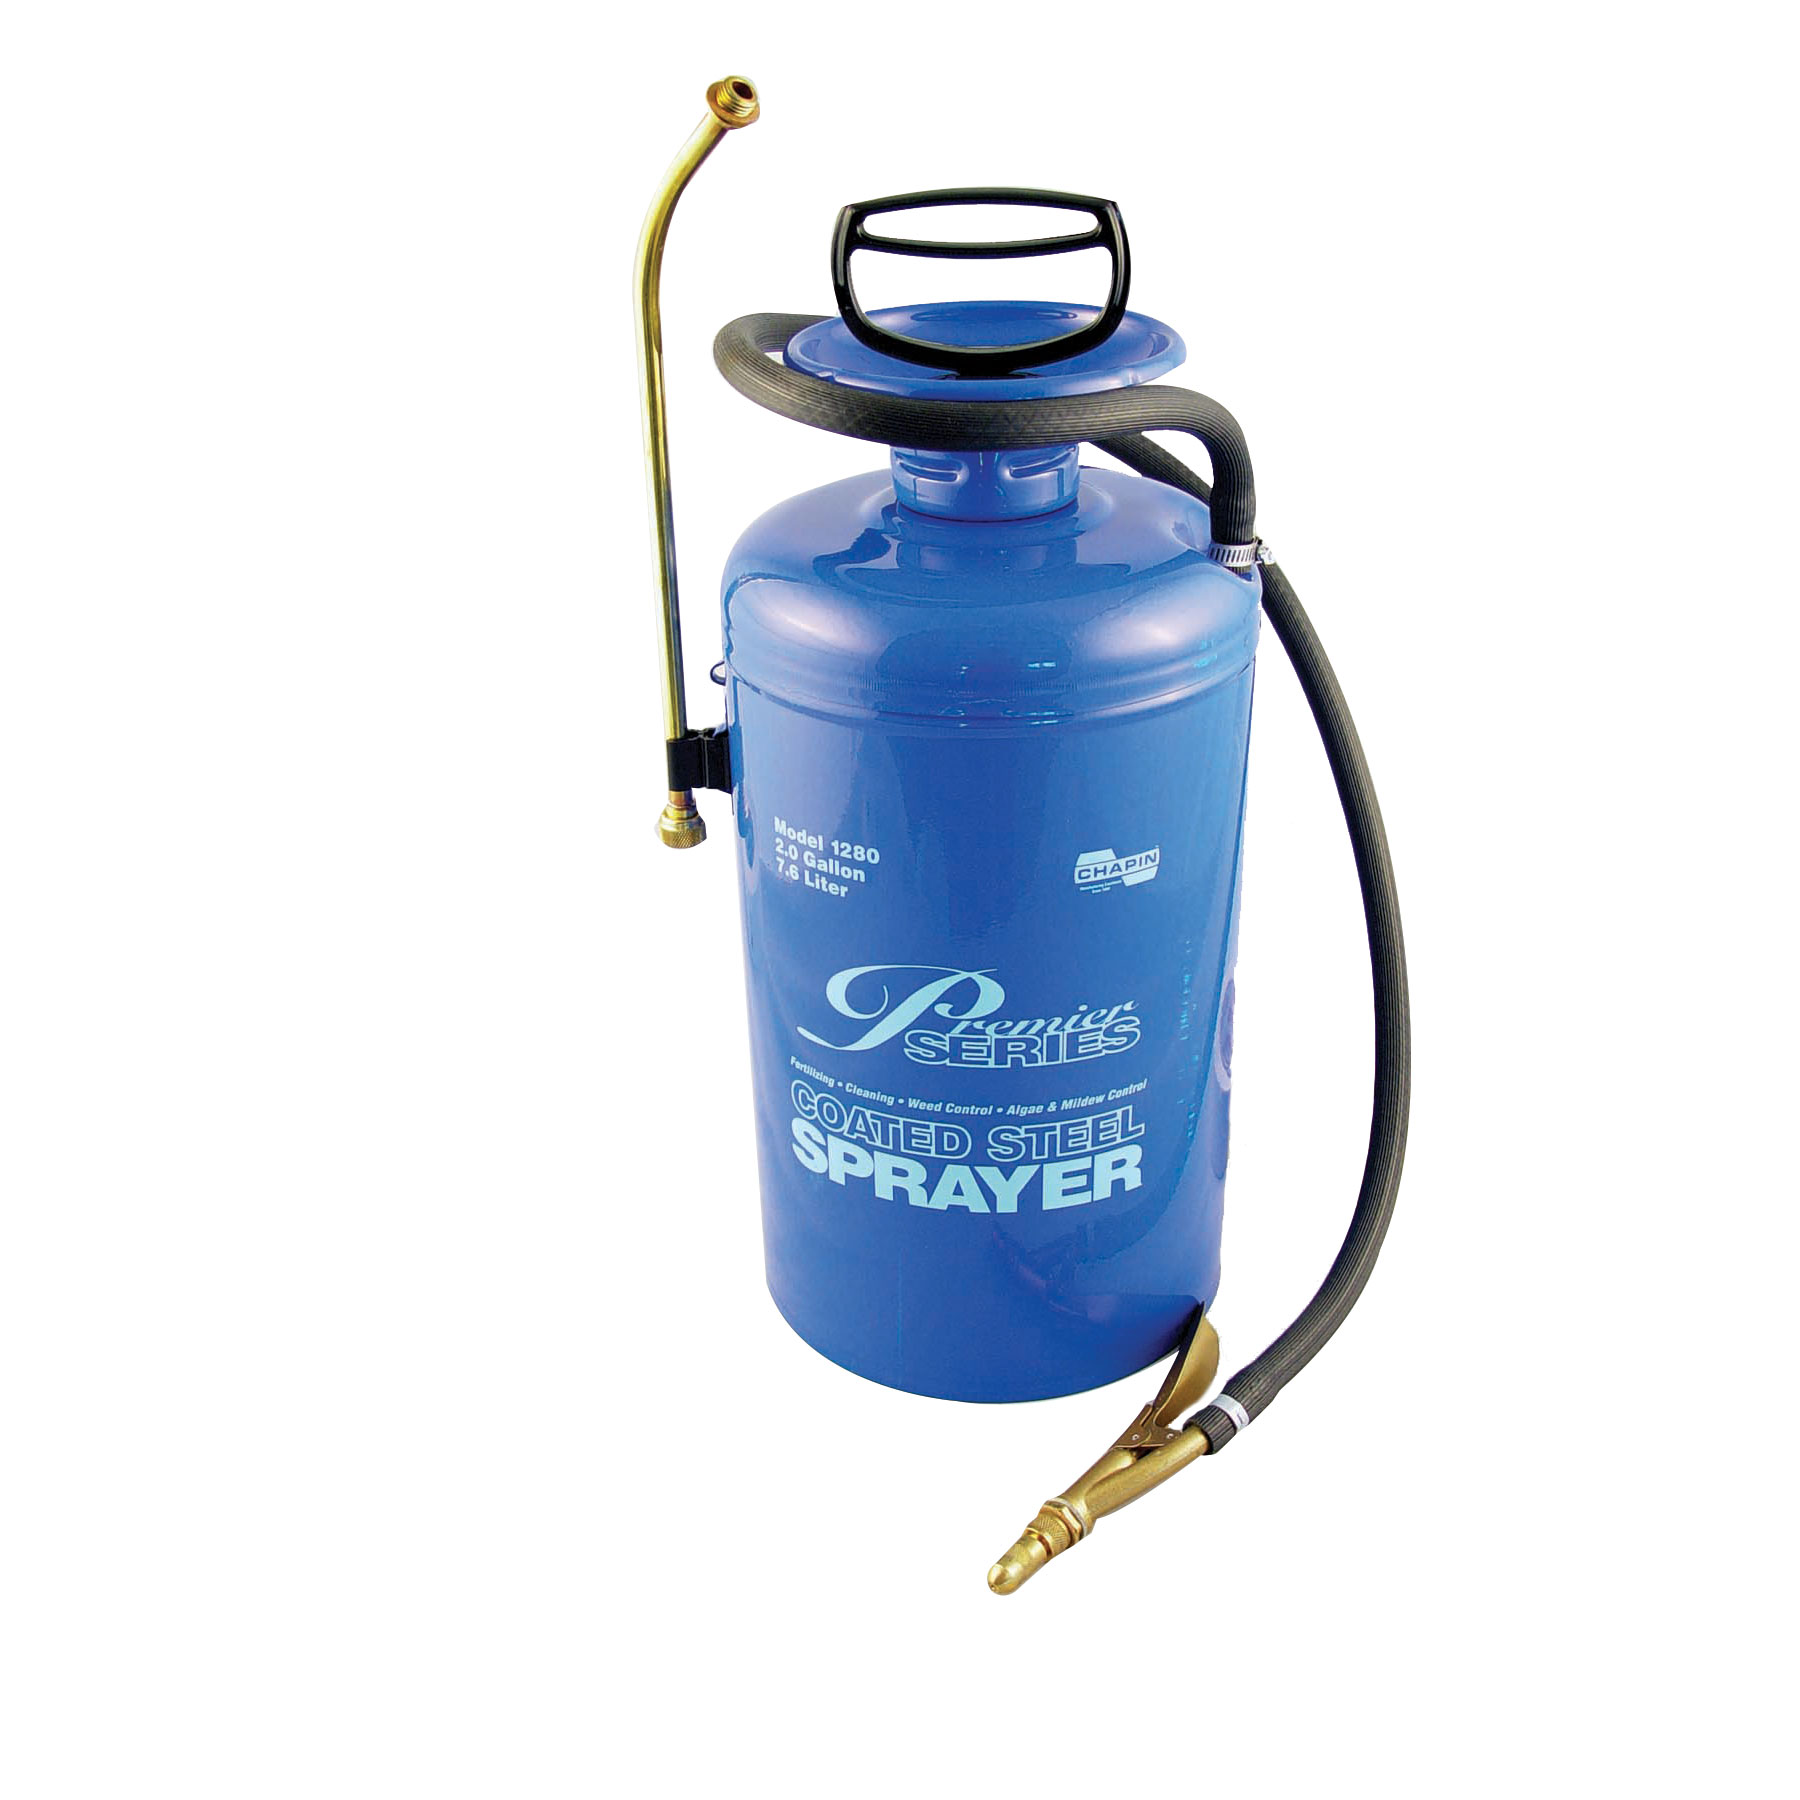 Chapin Premier Commercial Sprayer, 1 Gallon